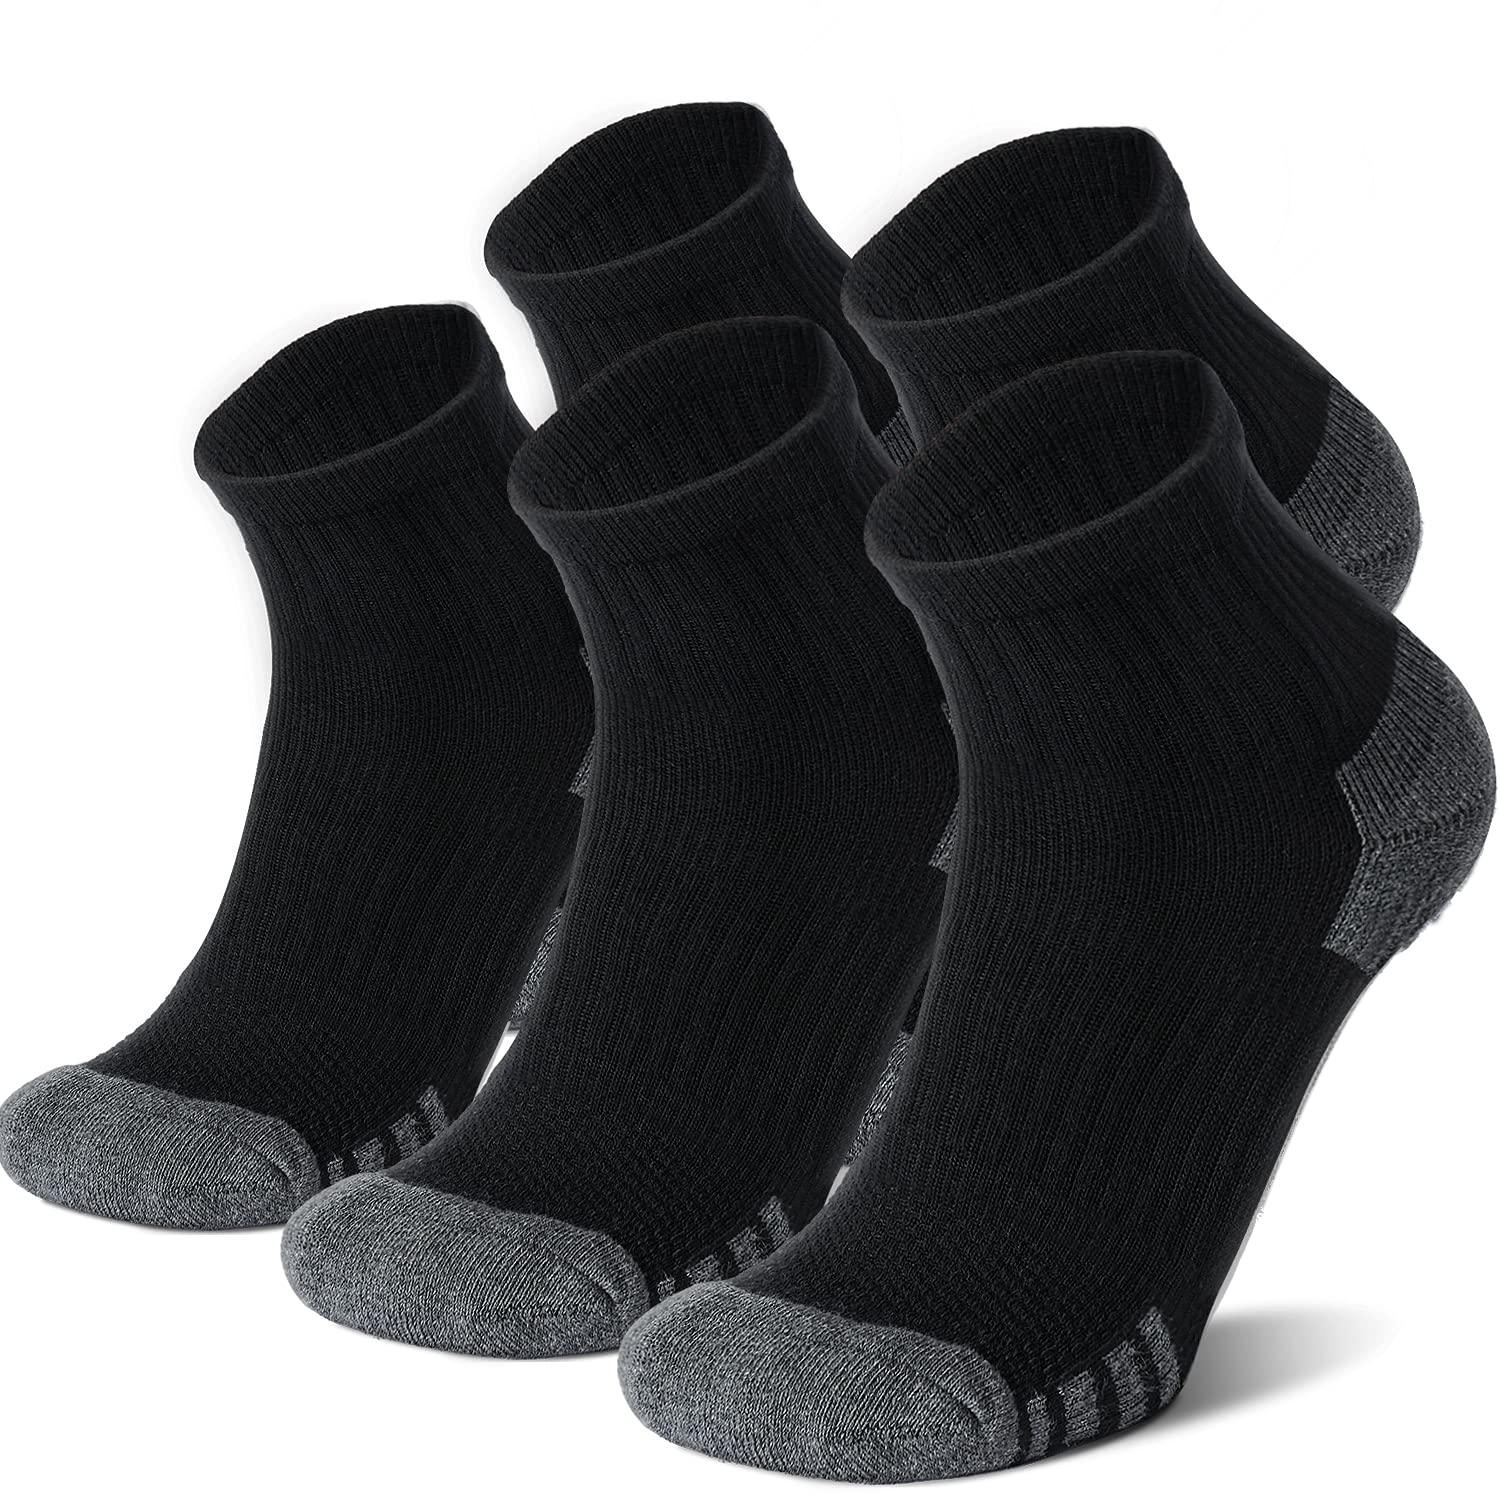 Iseasoo Copper Compression Socks for Men & Women Circulation-Ankle Plantar Fasciitis Socks Support for Athletic Running